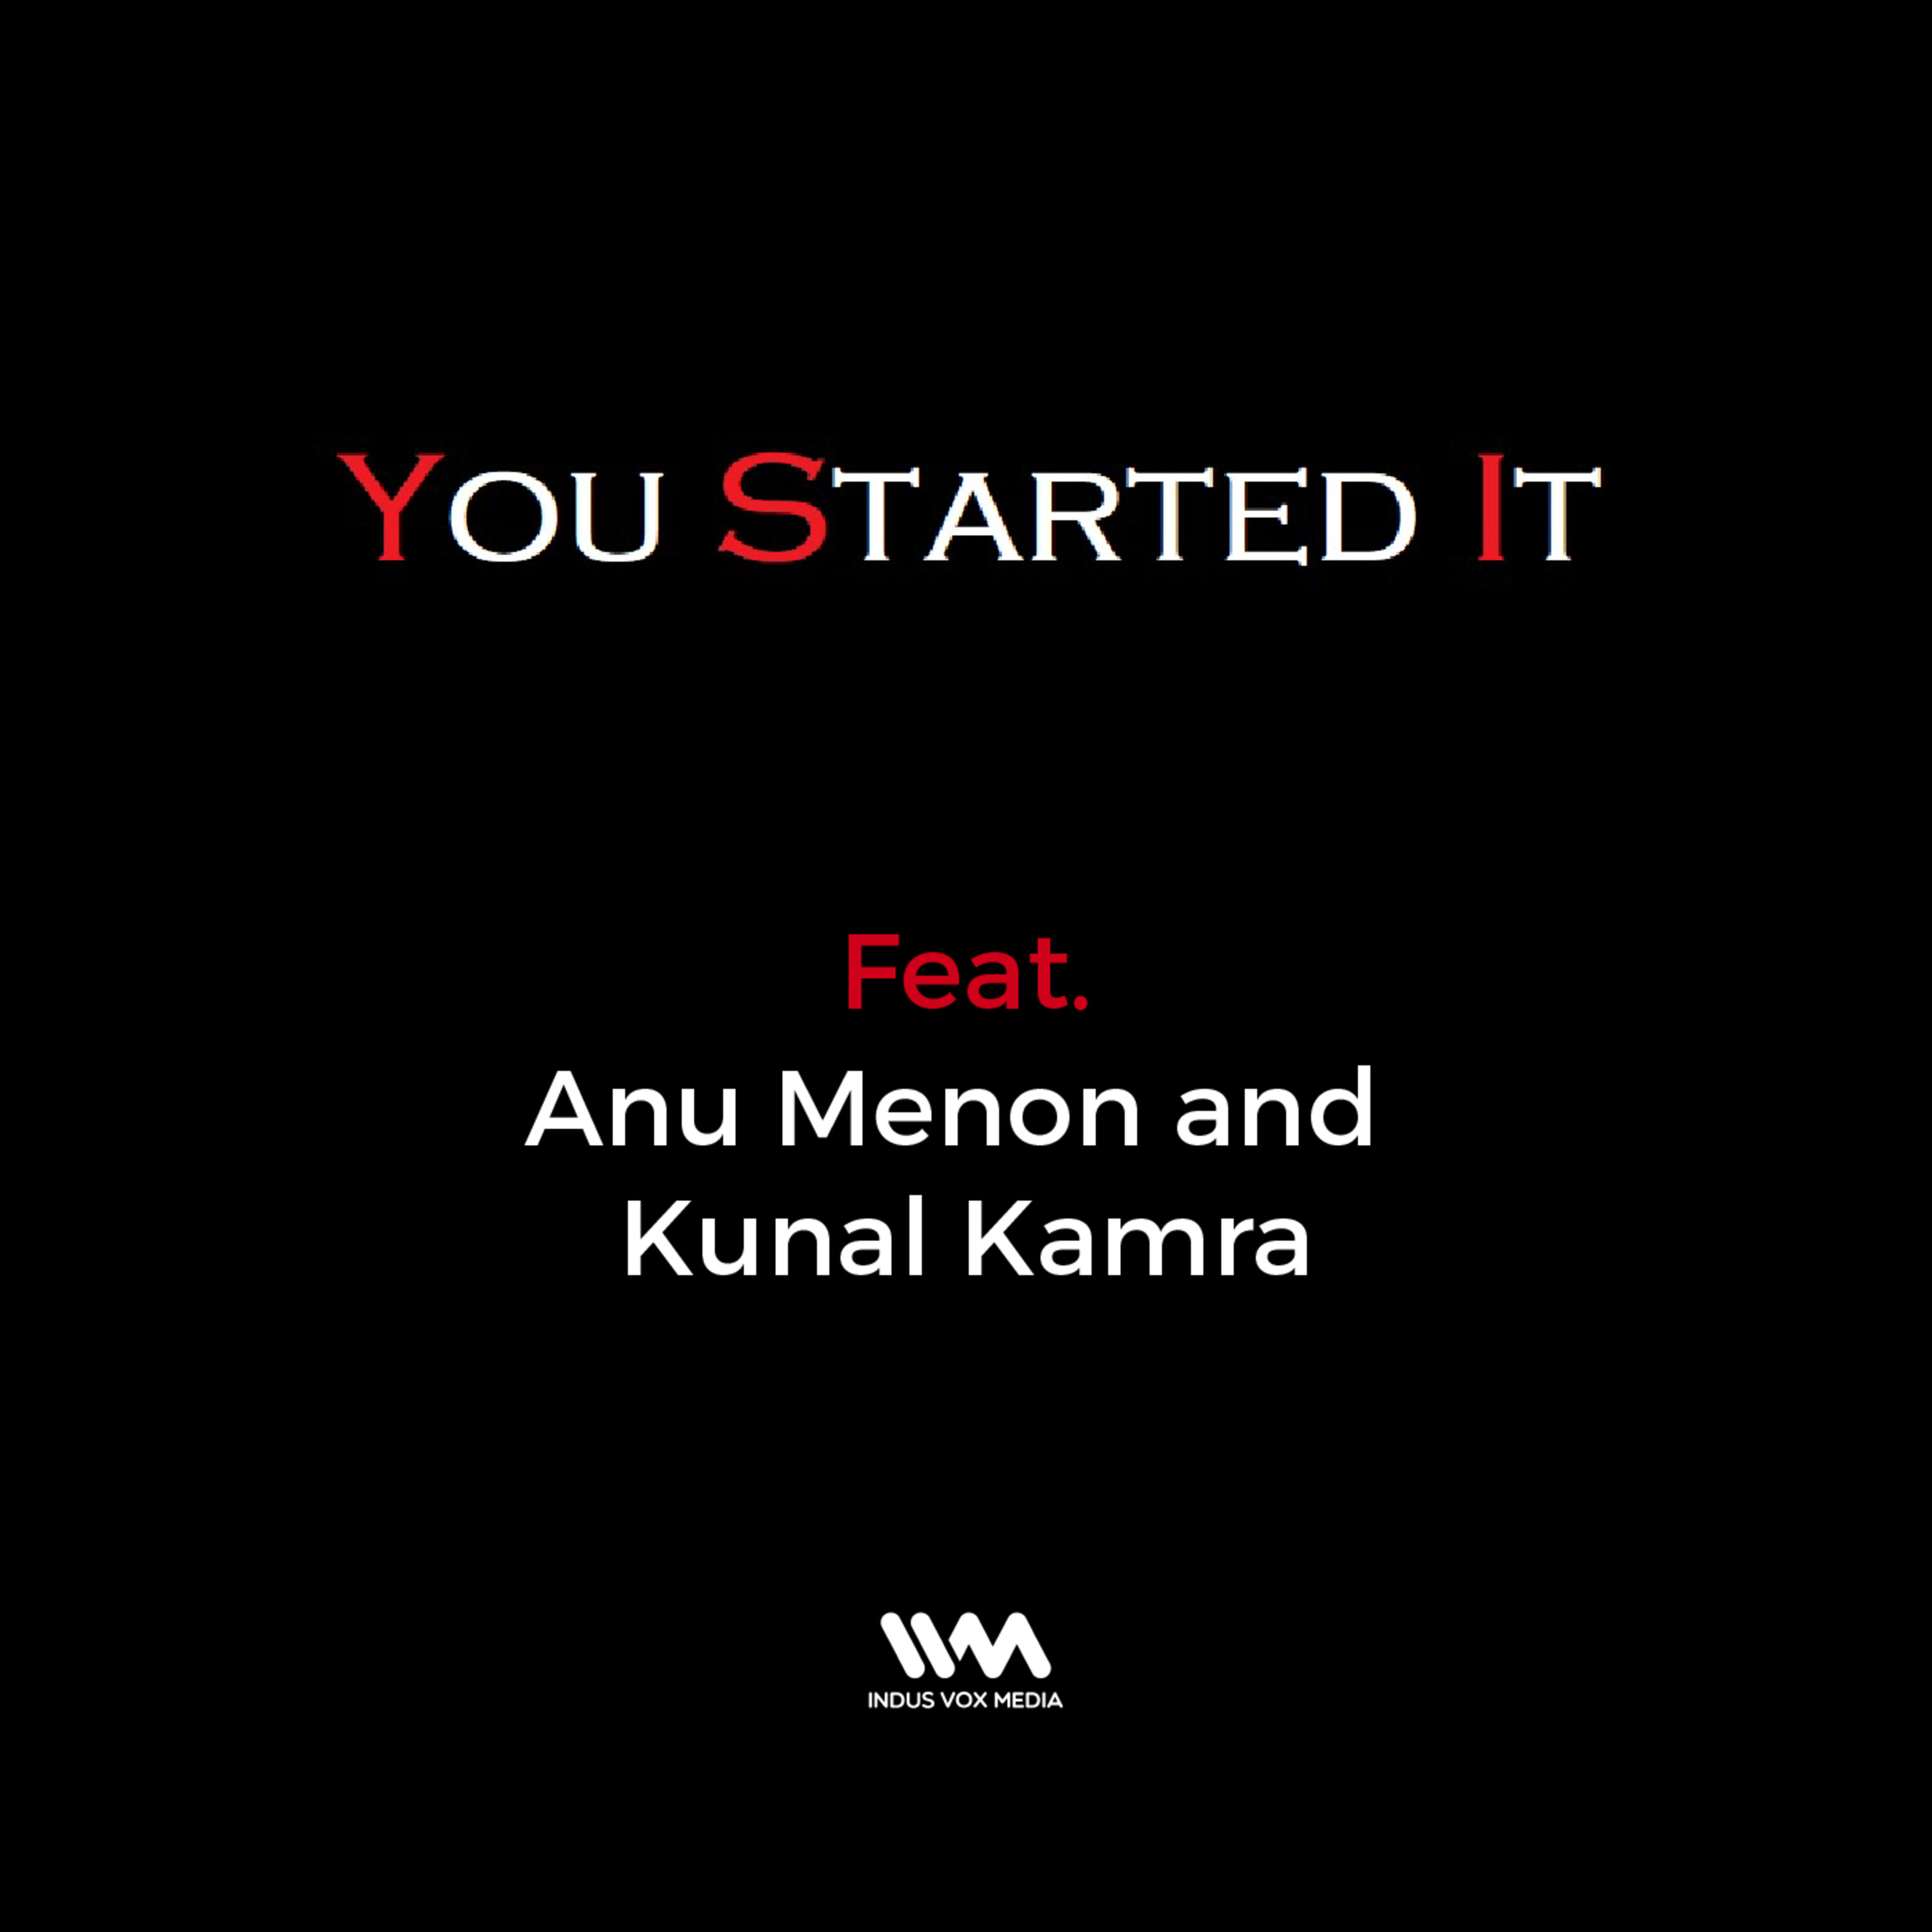 Ep. 01 feat. Anu Menon and Kunal Kamra